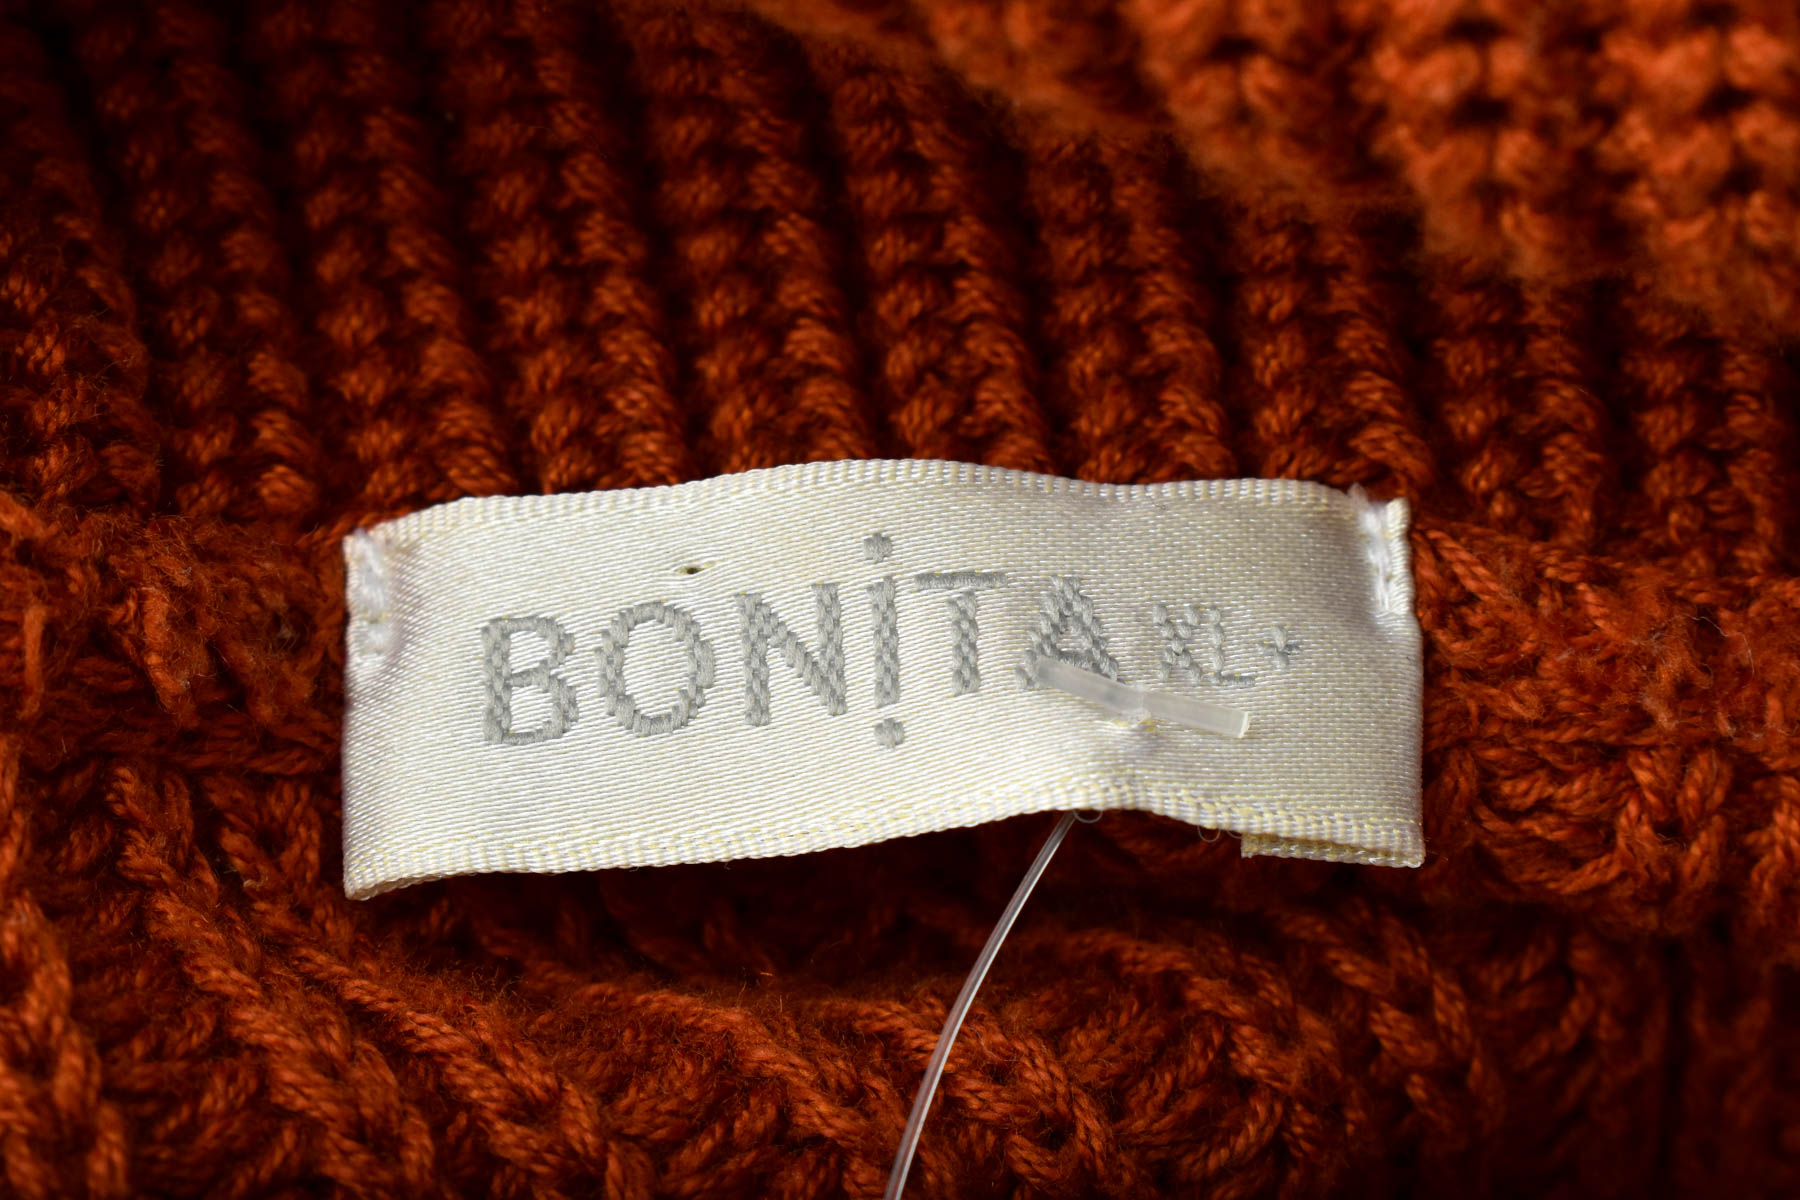 Women's sweater - BONiTA - 2